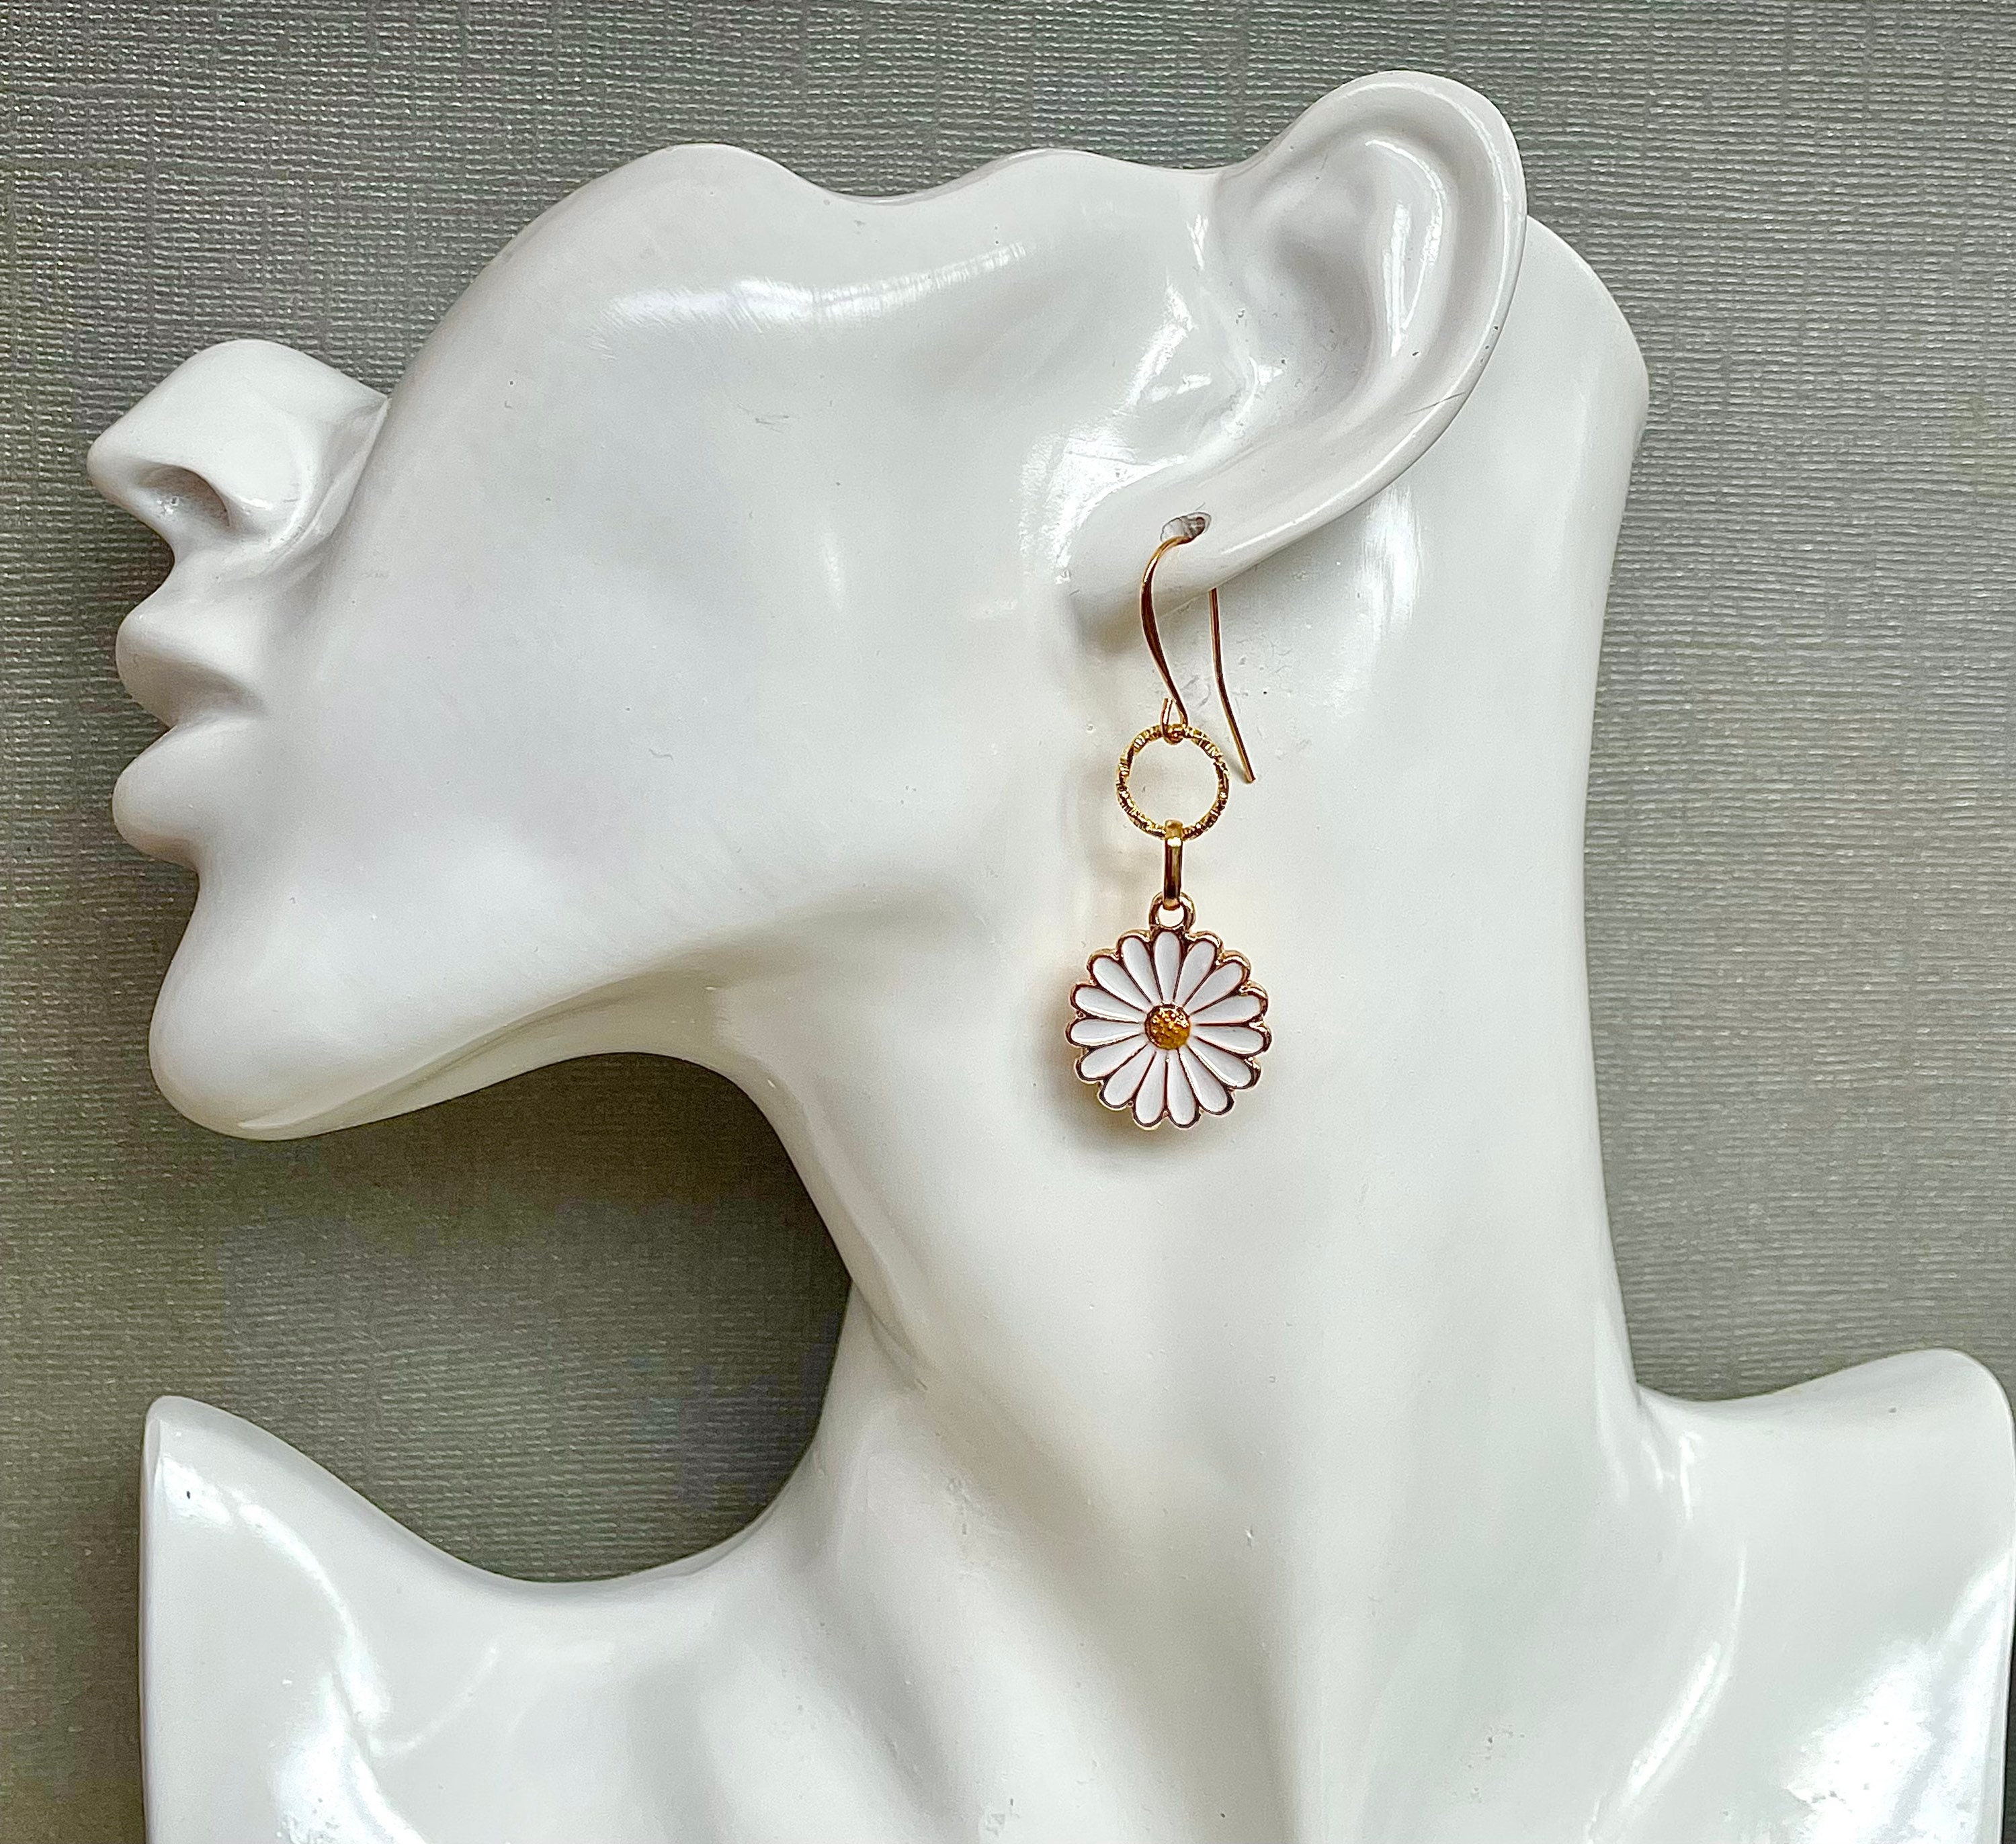 Jewellery Earrings Cluster Earrings gold finish enamelled daisy chain earrings Daisy earrings pretty yellow and white summer floral earrings long lightweight earrings 